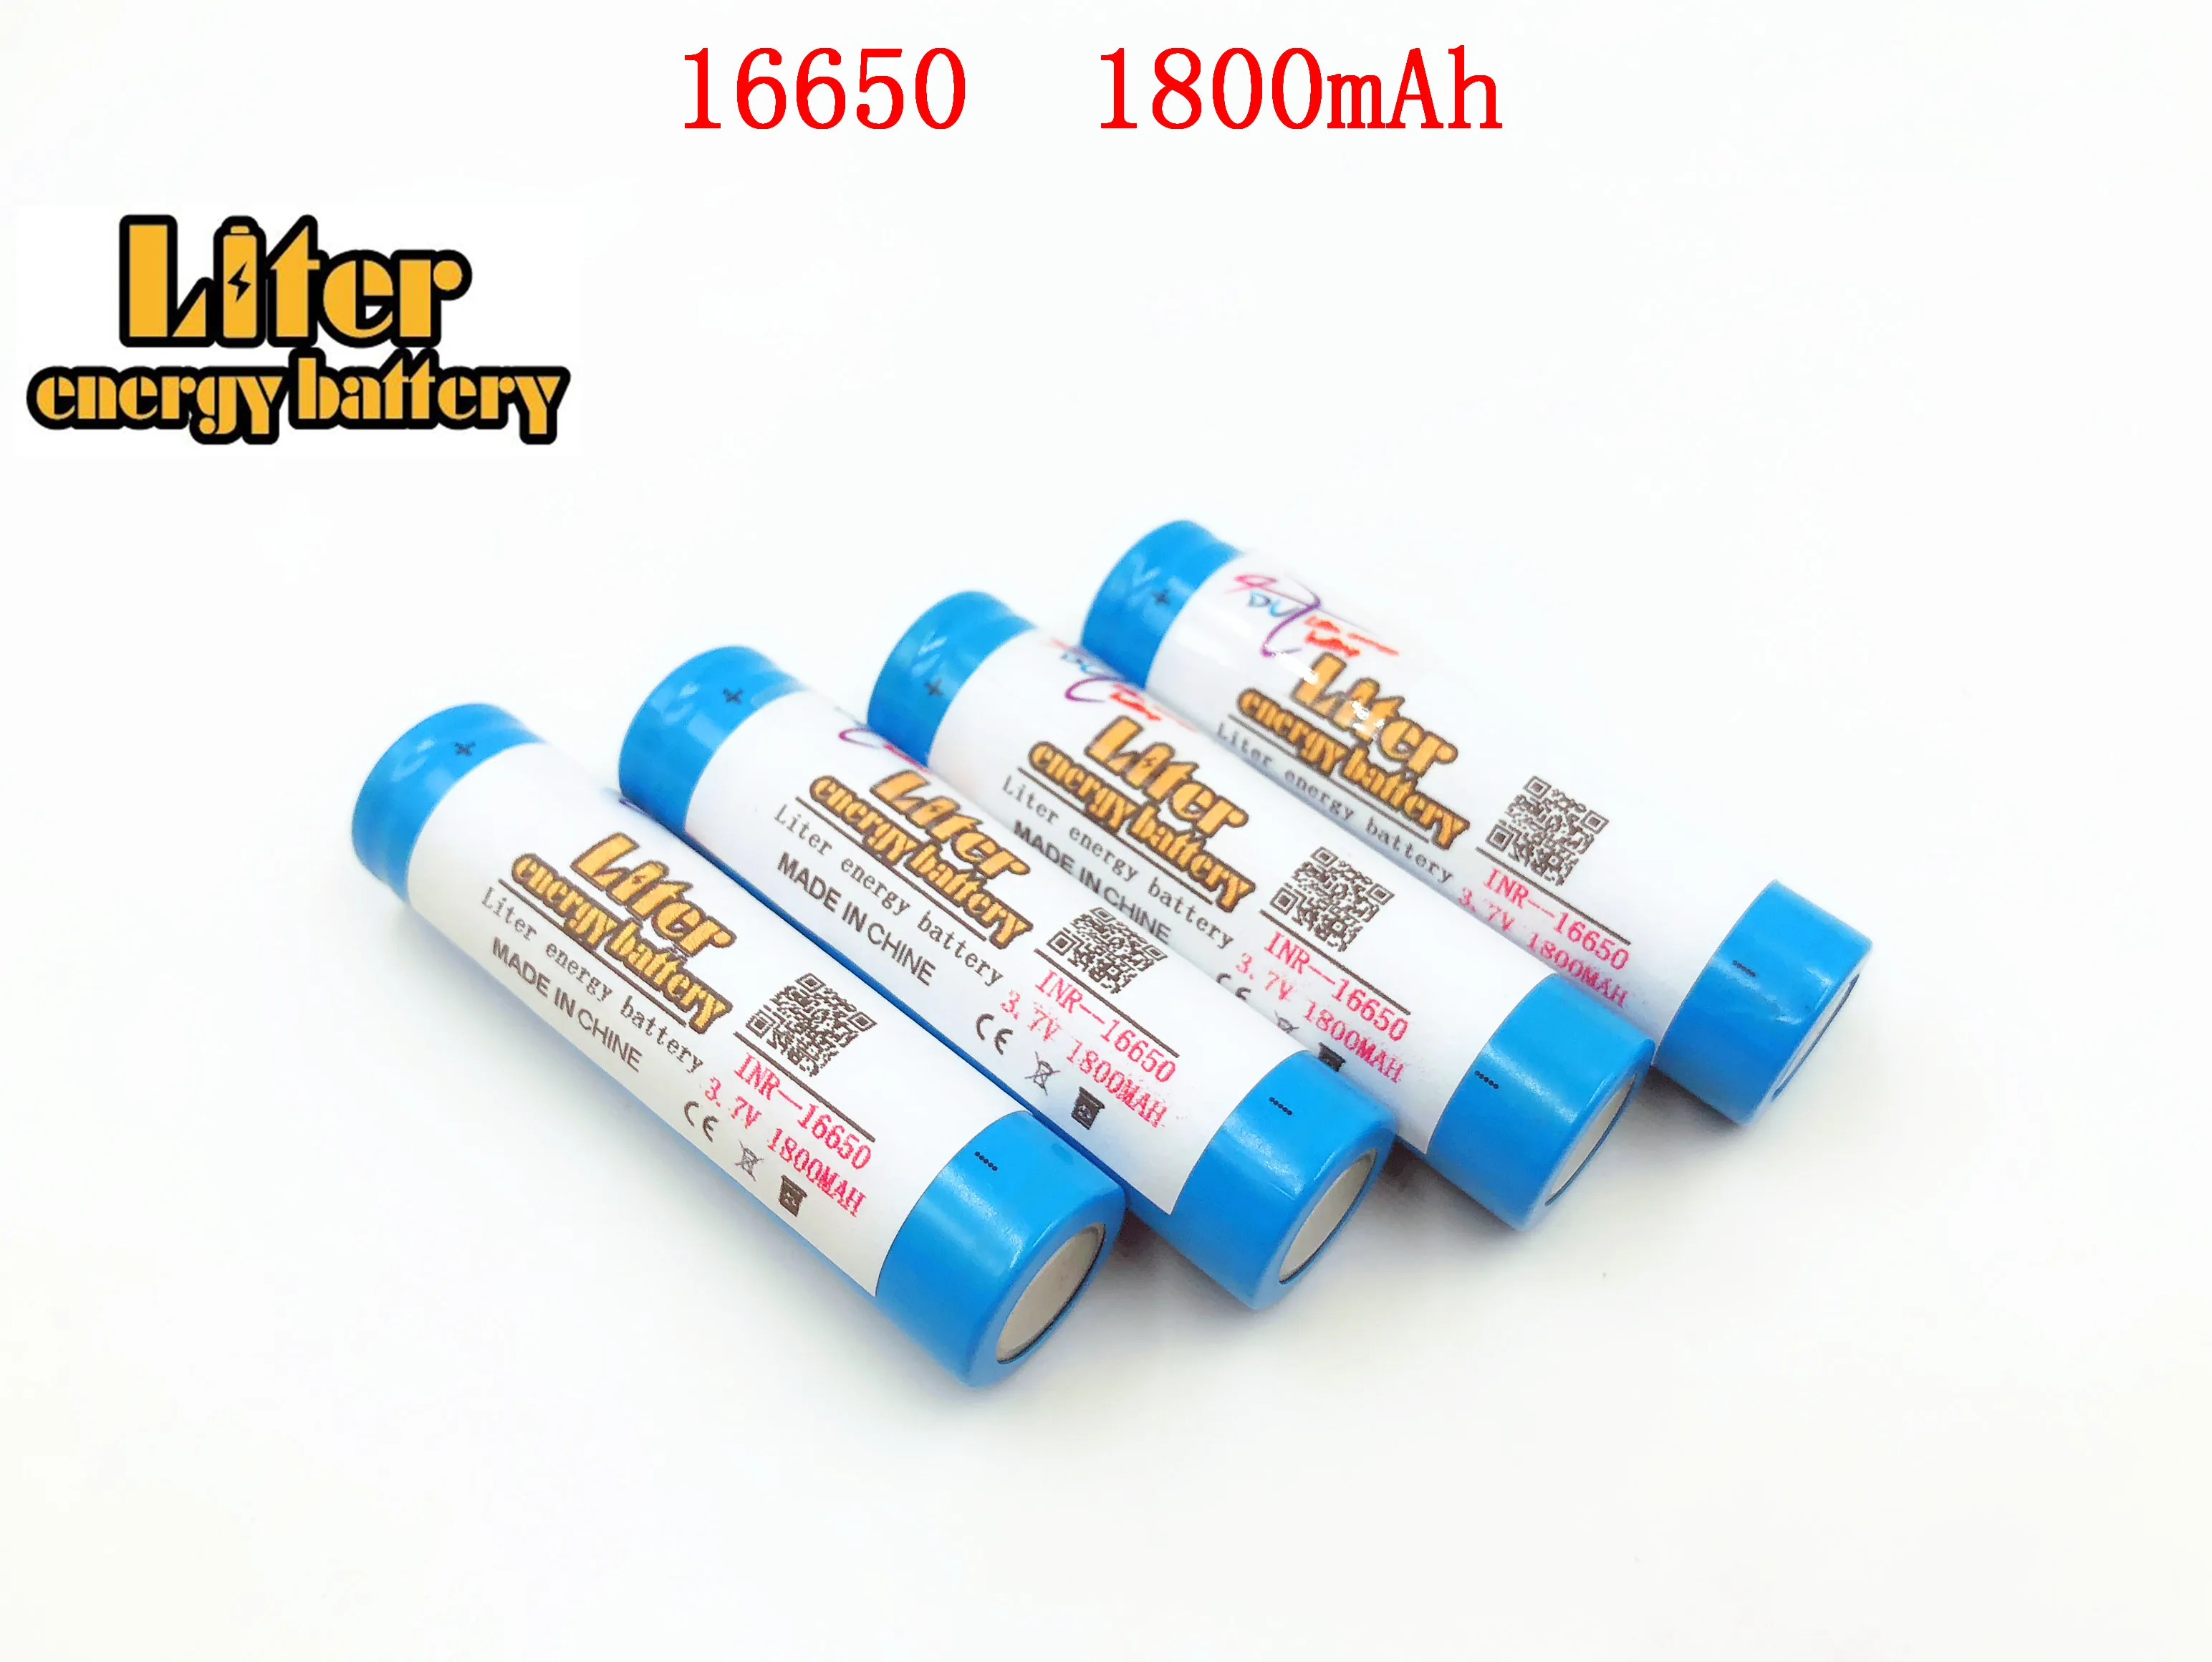 Liter energy battery 16650 1800mah 3.7V 9.25Wh Li-ion rechargeable battery Original UR16650ZTA